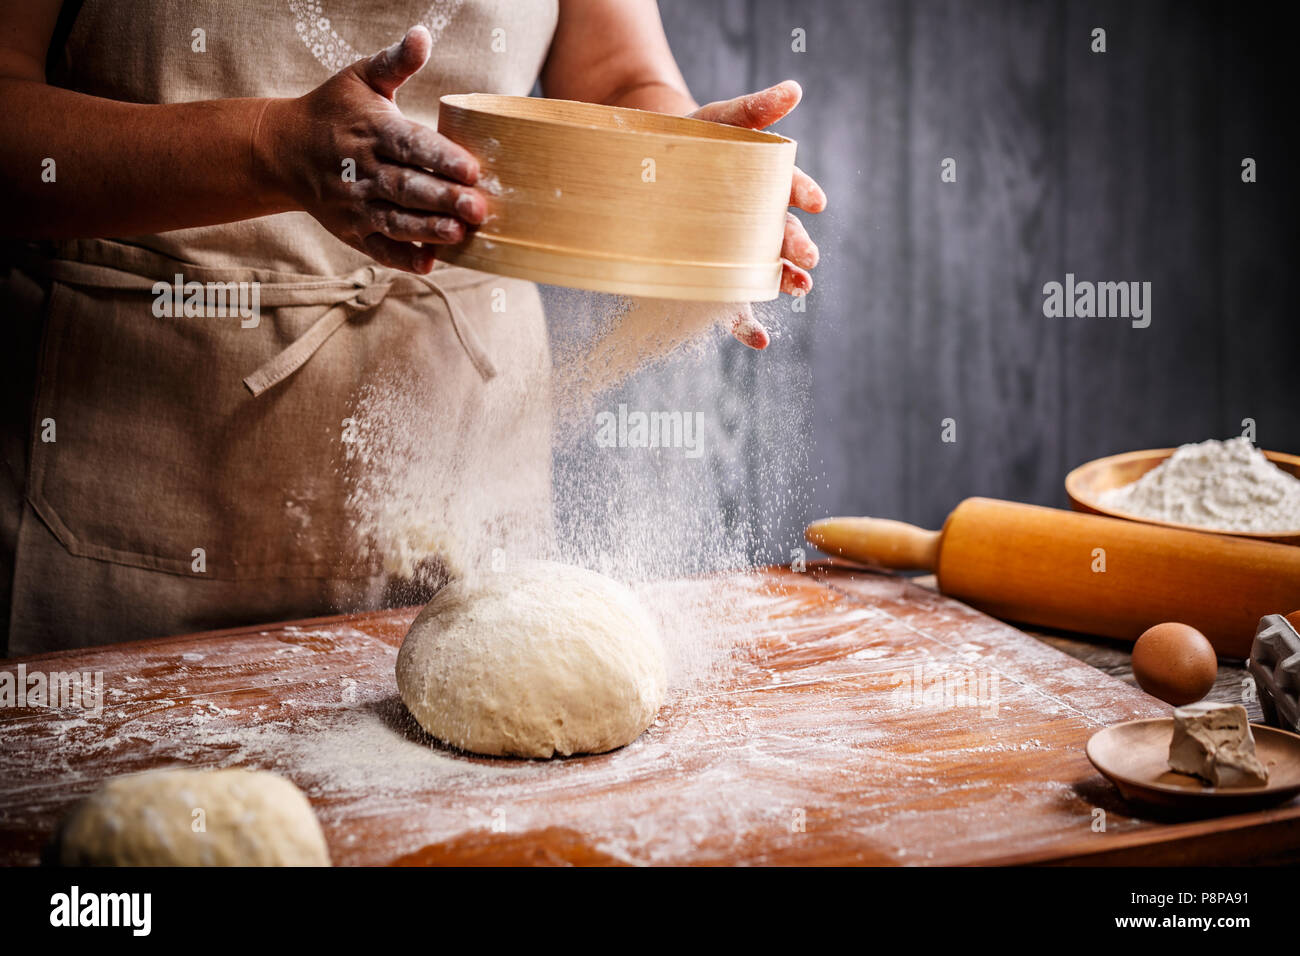 Woman hands sifting flour over dough Stock Photo